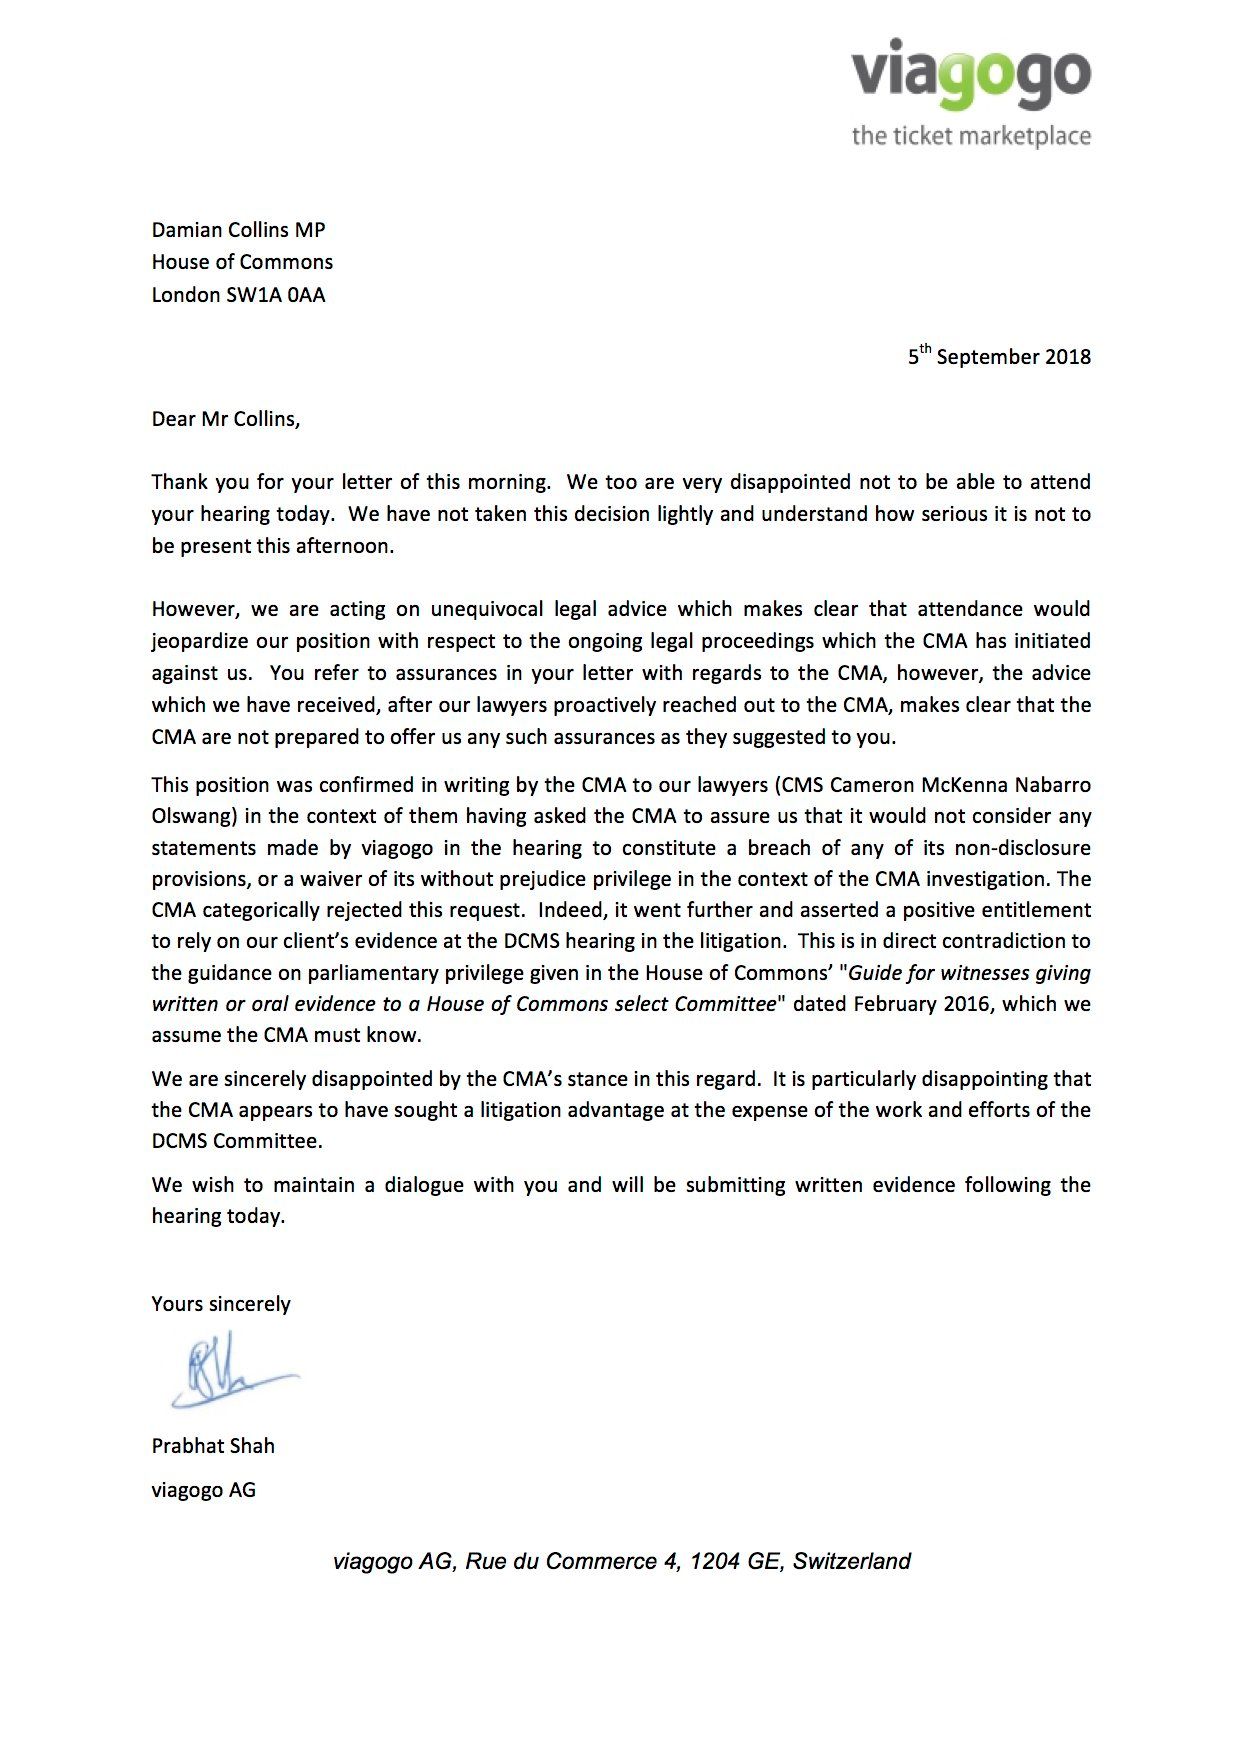 Viagogo letter to MP Damian Collins